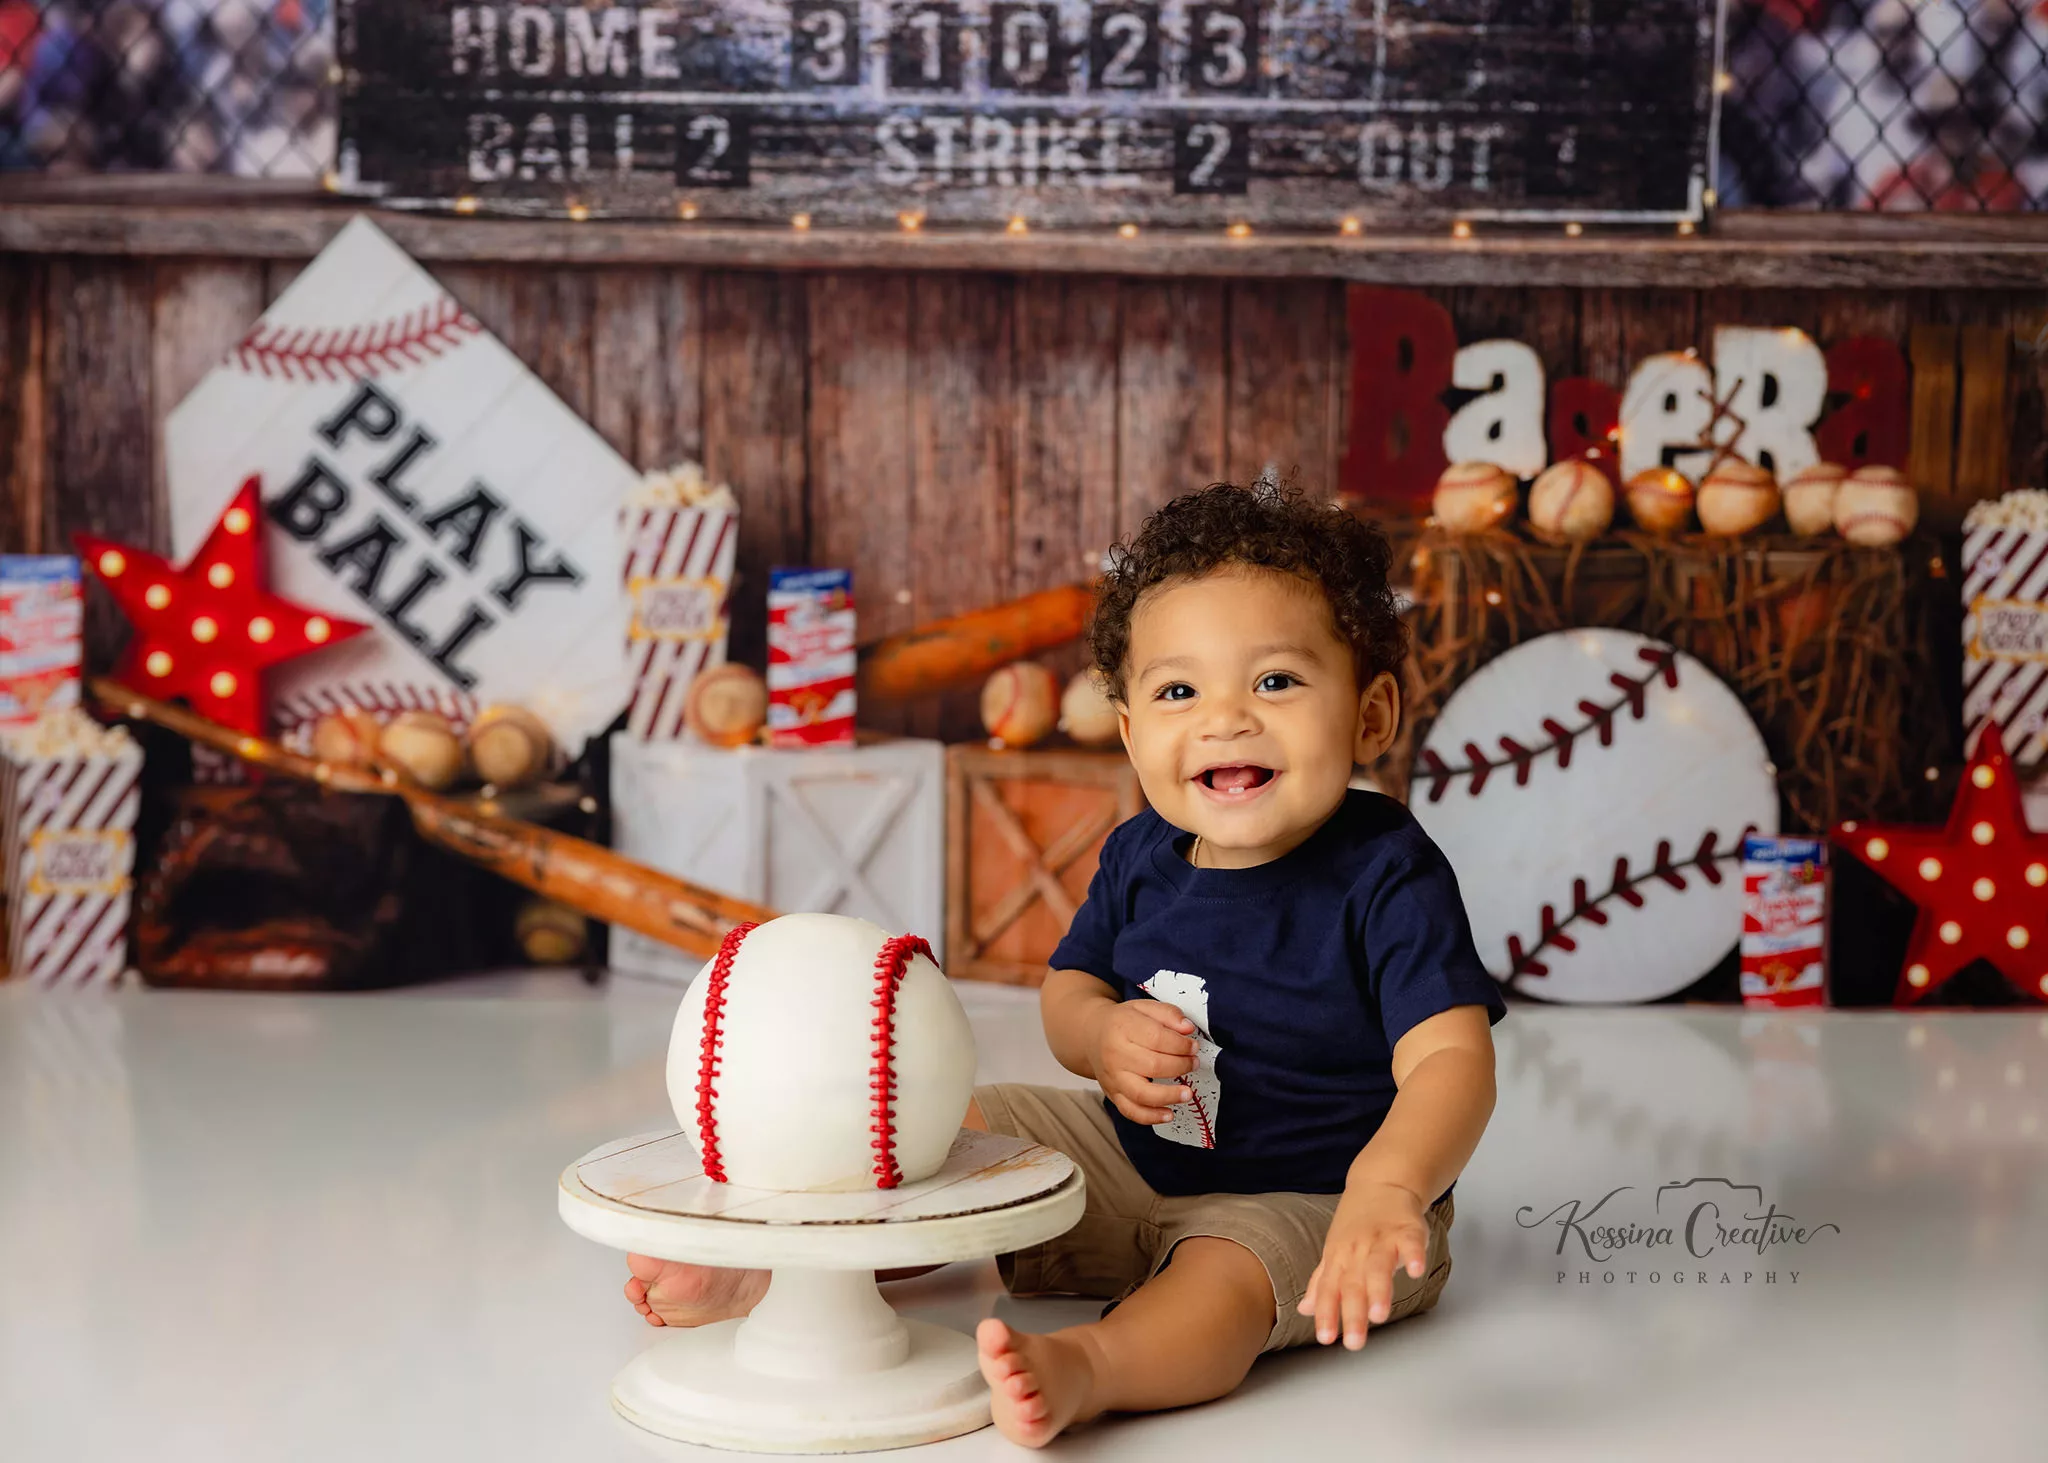 Orlando Boy Cake Smash 1st Birthday Photographer Photo Studio play ball baseball cake score board back drop base ball bat